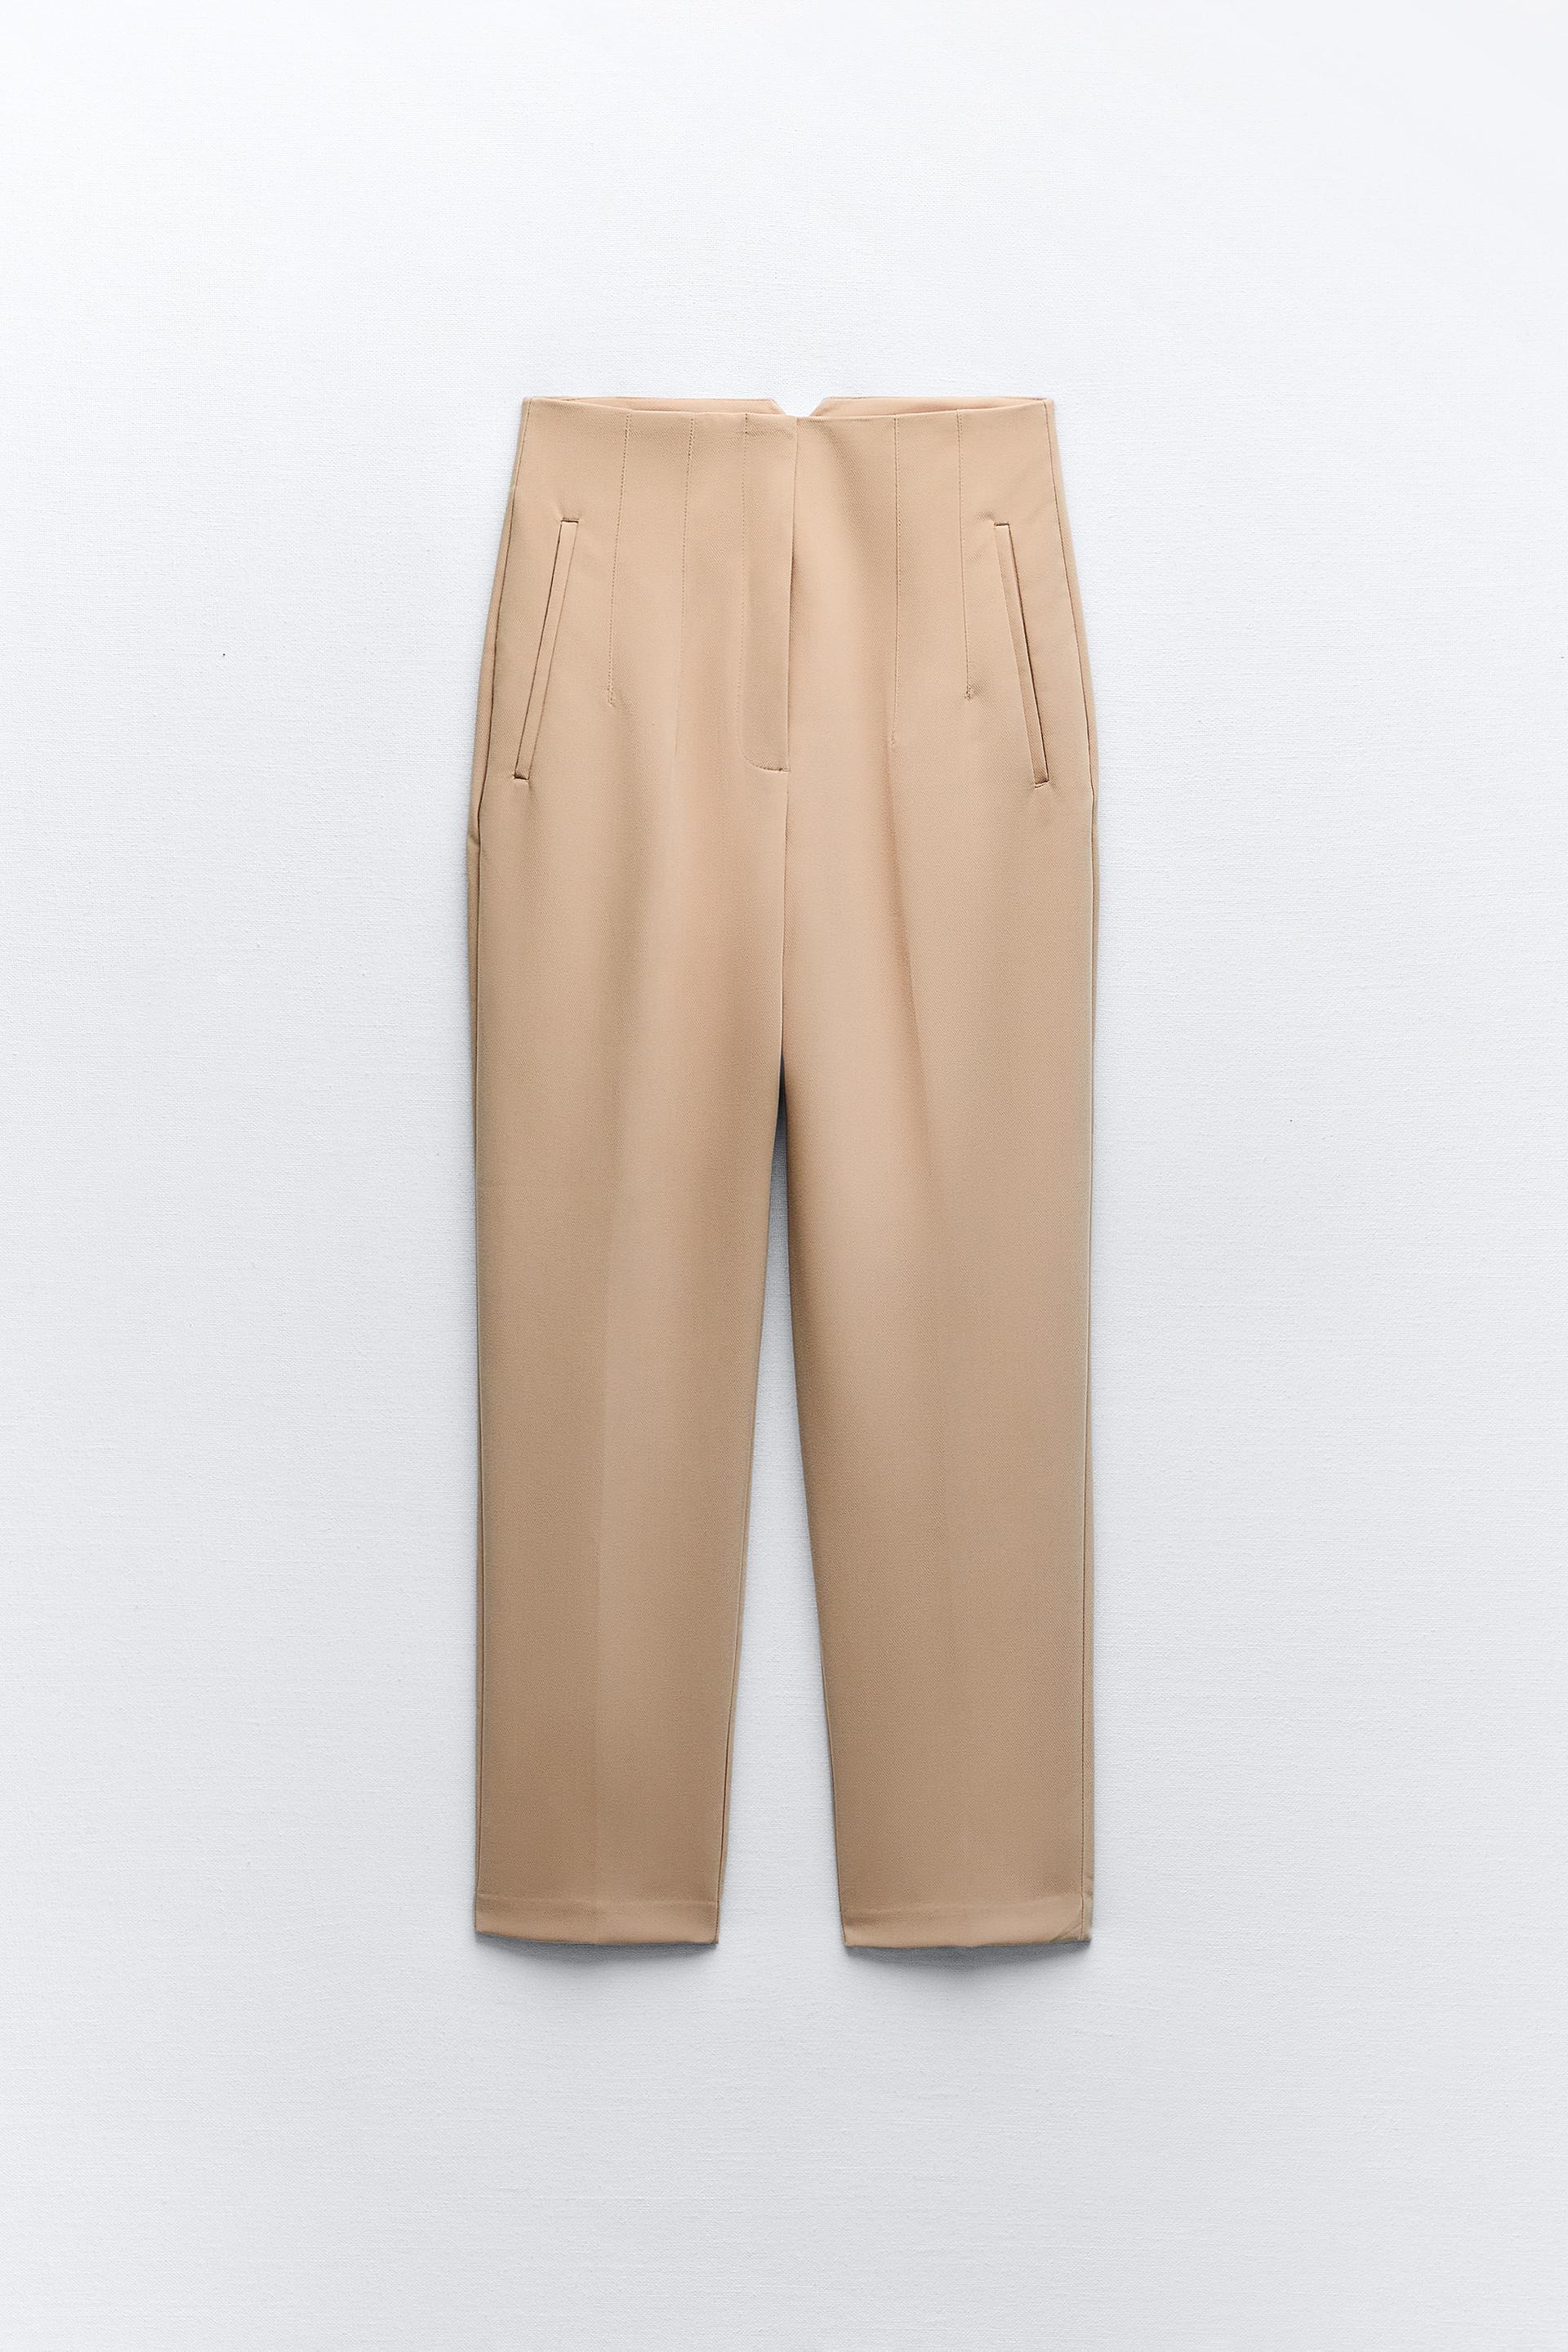 Zara, Pants & Jumpsuits, Zara High Rise Trousers